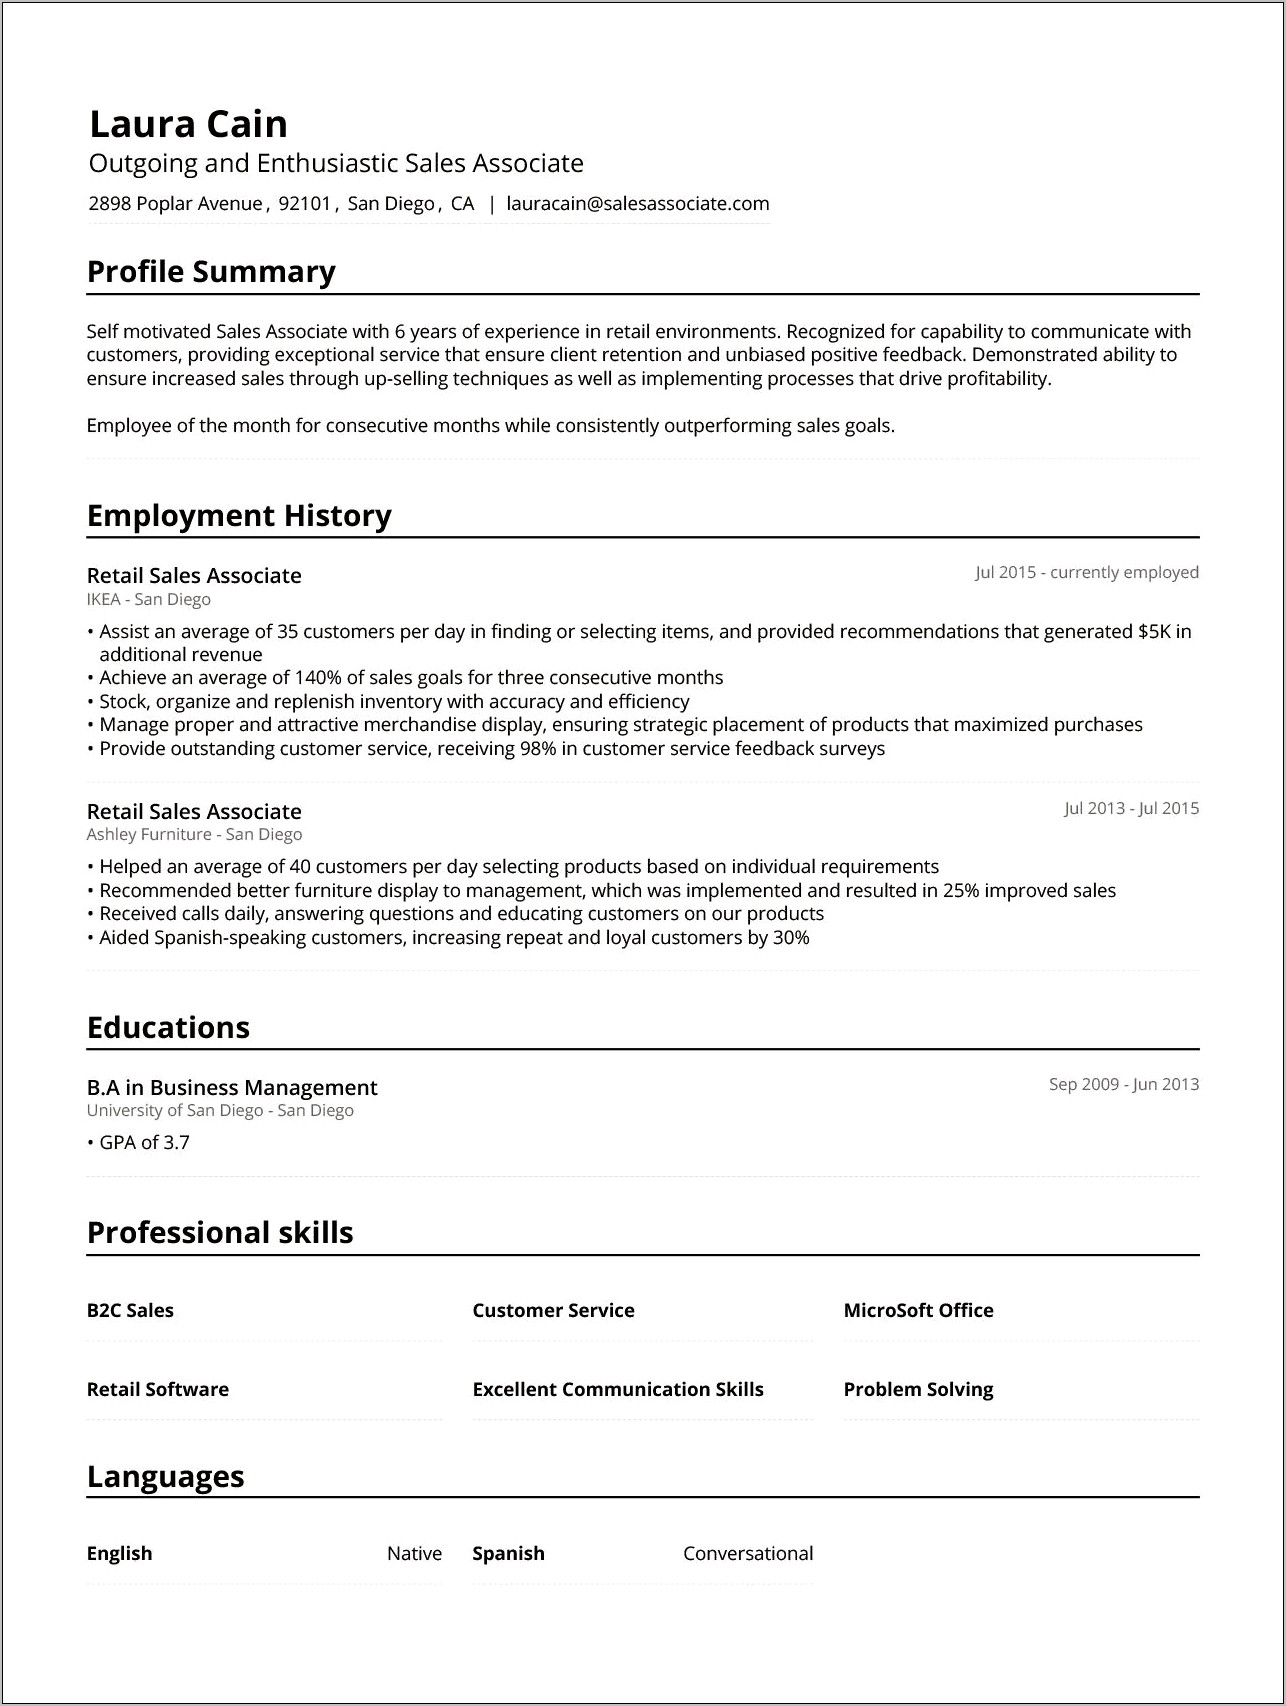 Sample Resume For Sales Associate Manager